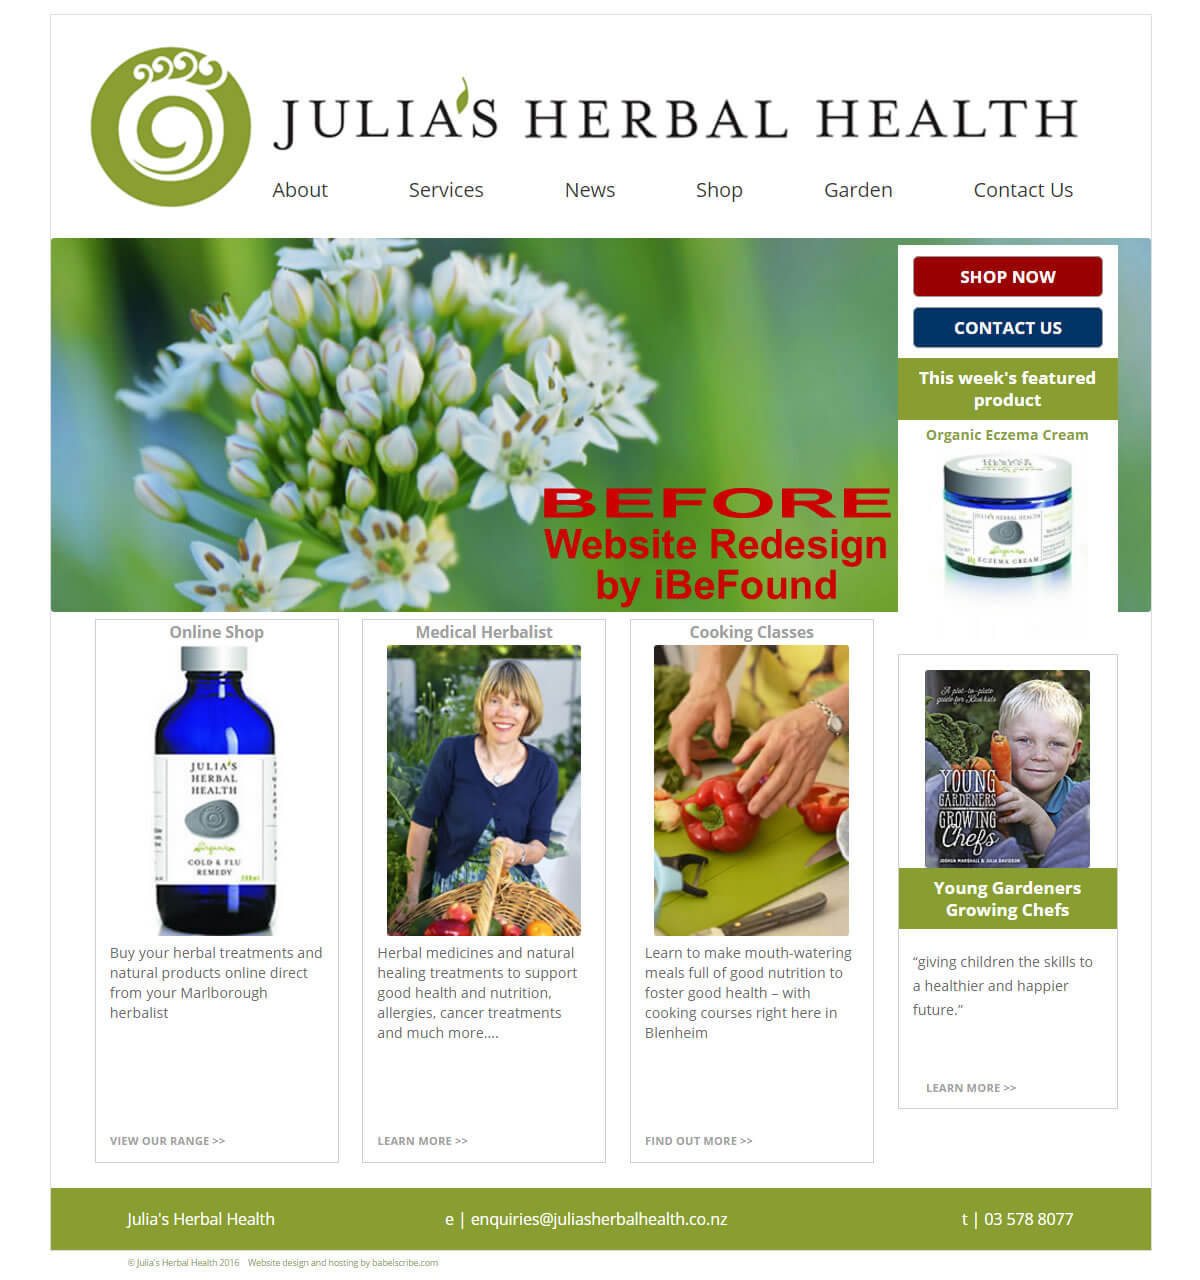 Homepage Of Julias Herbal Health Before Website Redesign By Ibefound